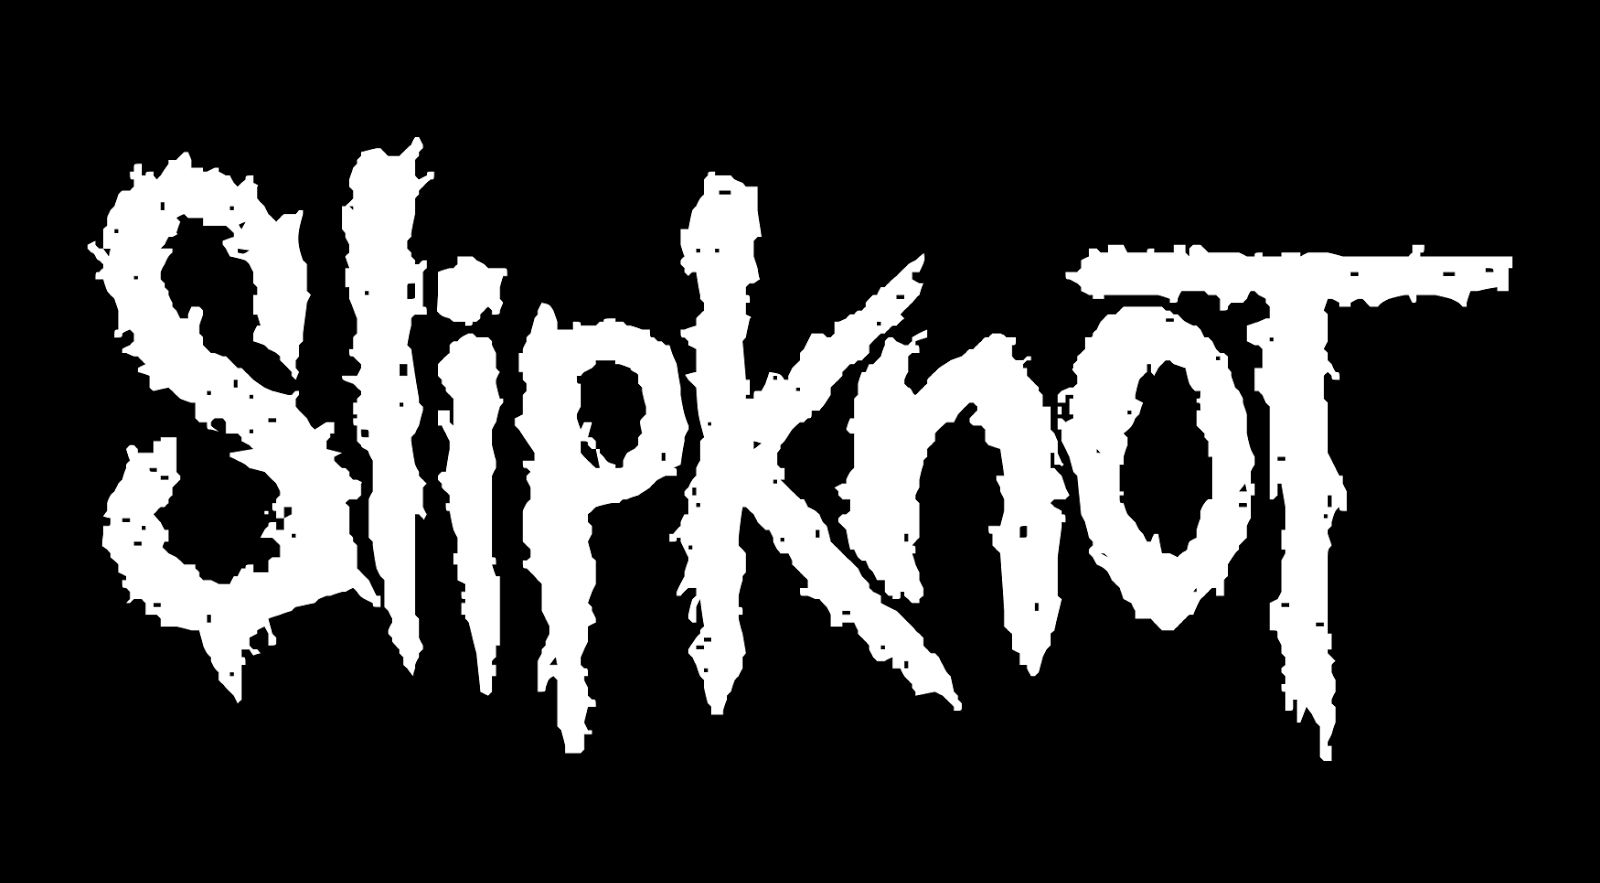  thiết kế logo Slipknot